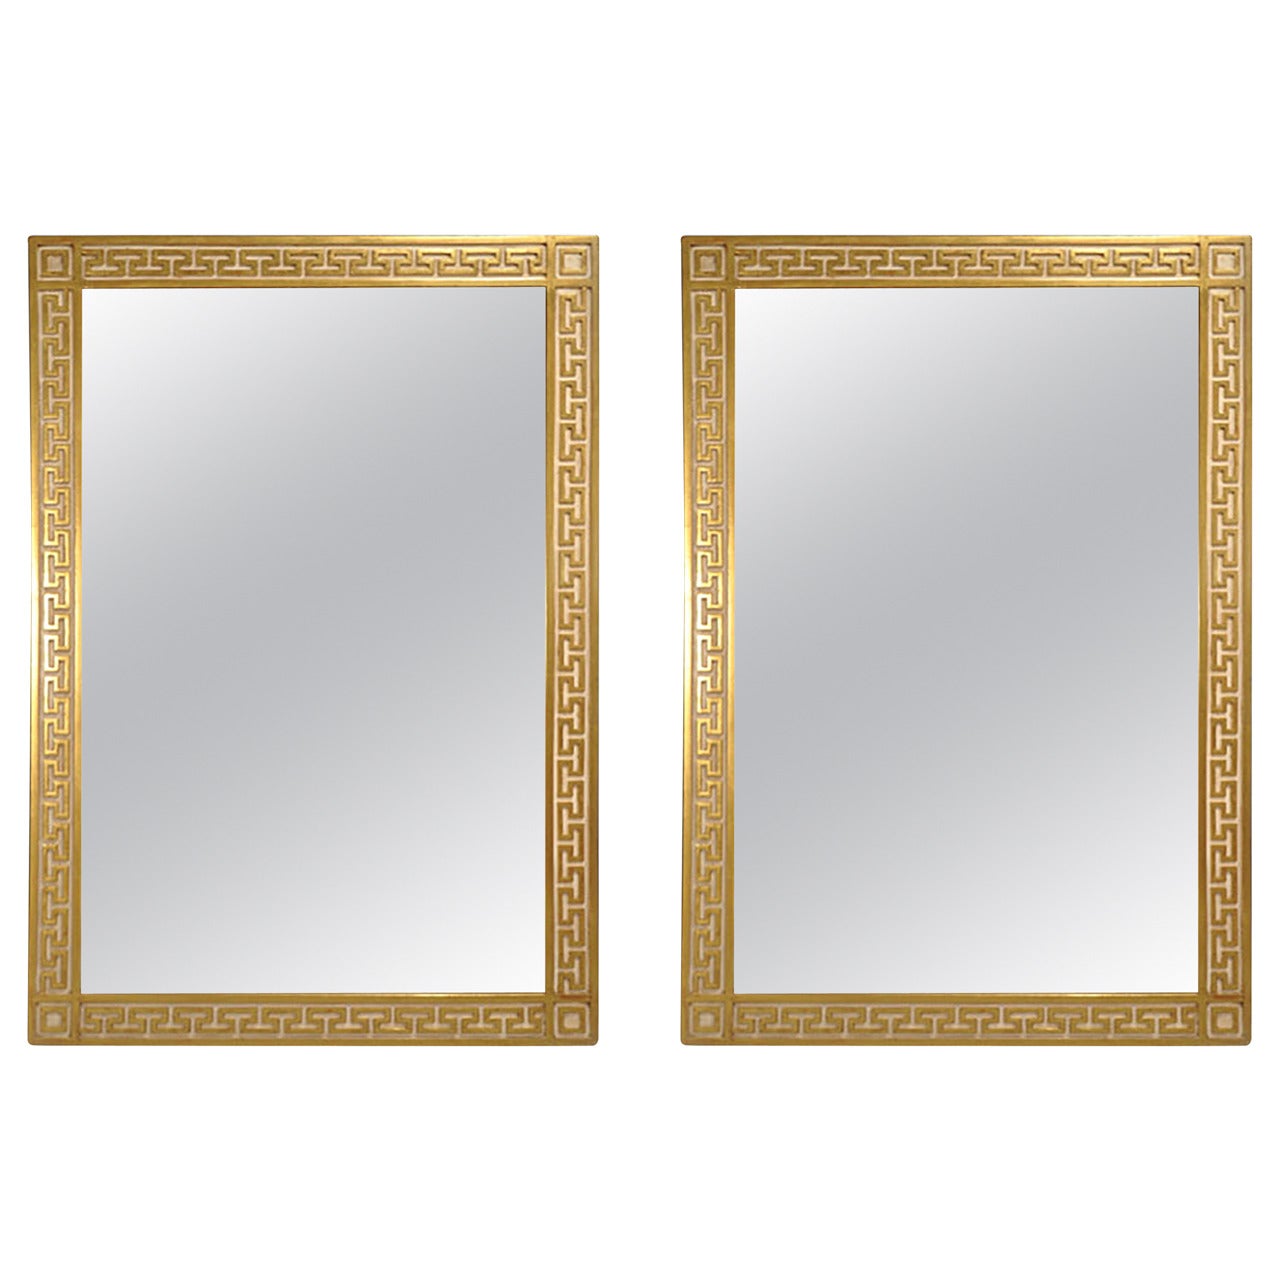 Two Modern Italian Neoclassical Style Parcel-Gilt Greek Key Wall Mirrors